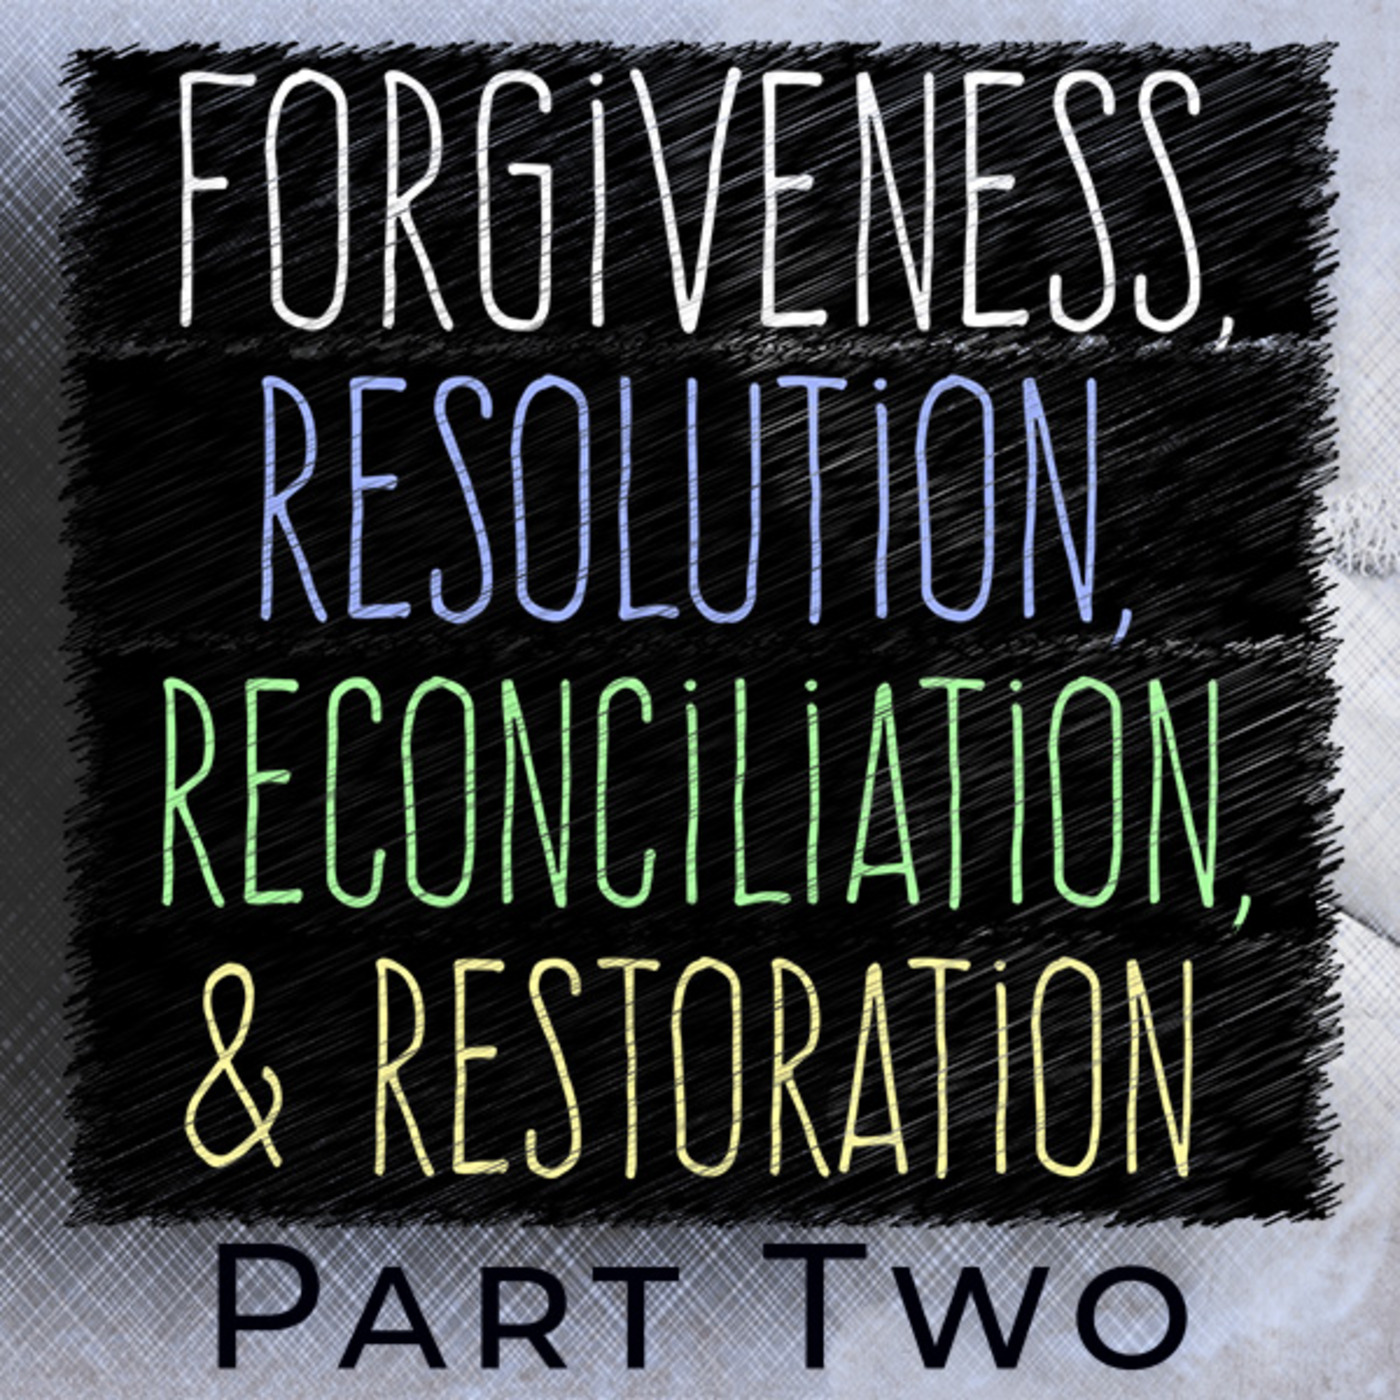 Forgiveness, Resolution, Reconciliation & Restoration - Part Two